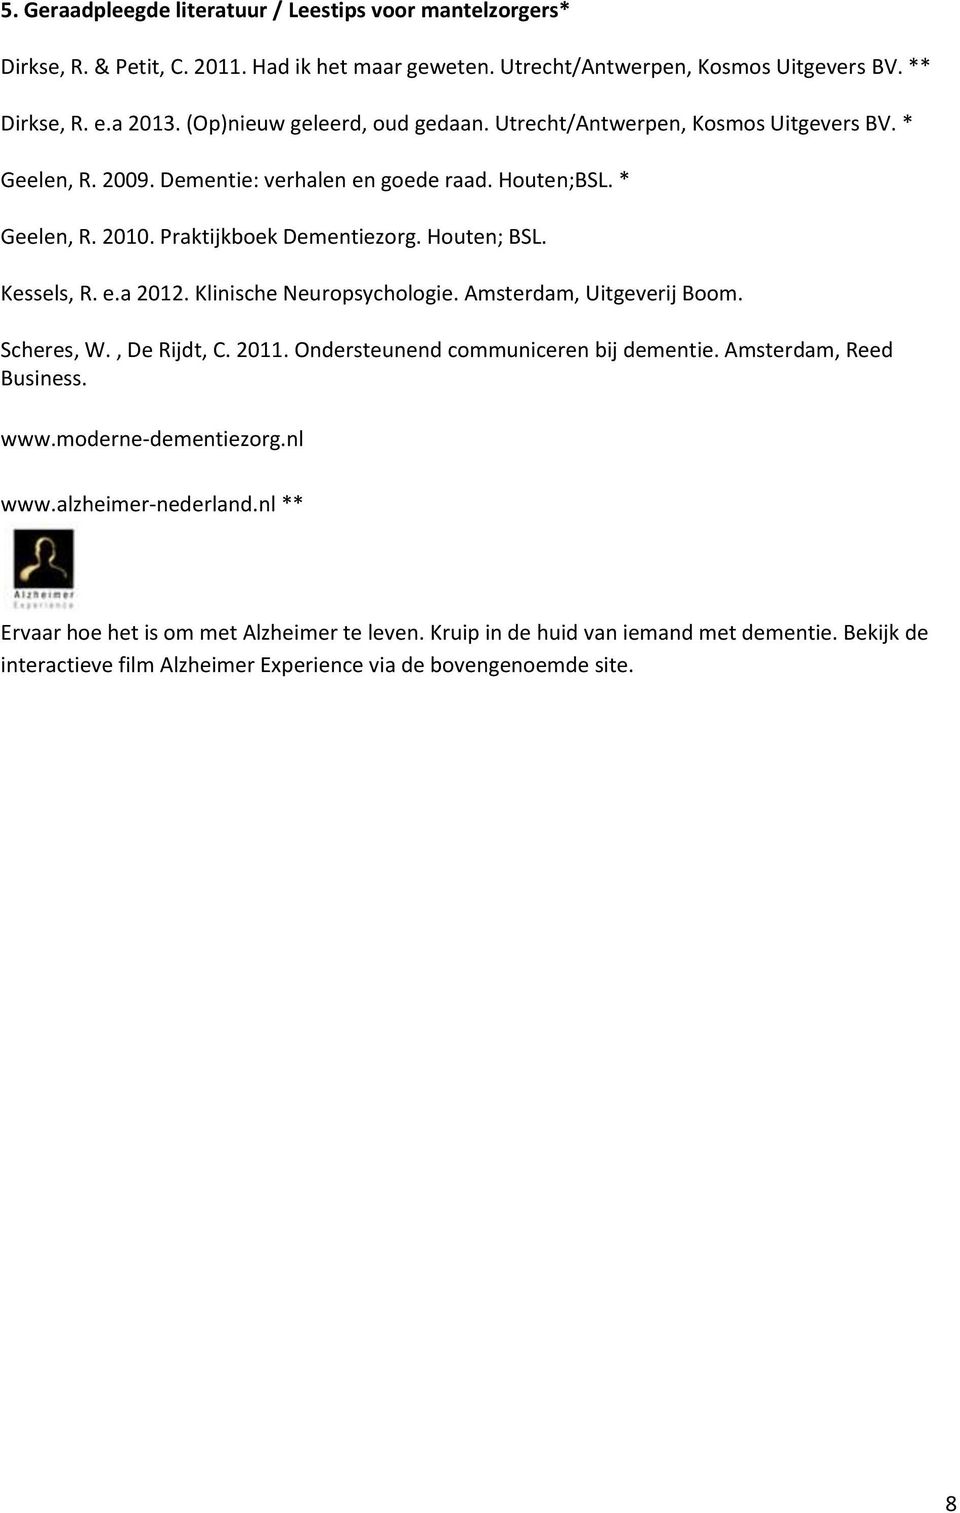 Houten; BSL. Kessels, R. e.a 2012. Klinische Neuropsychologie. Amsterdam, Uitgeverij Boom. Scheres, W., De Rijdt, C. 2011. Ondersteunend communiceren bij dementie. Amsterdam, Reed Business.